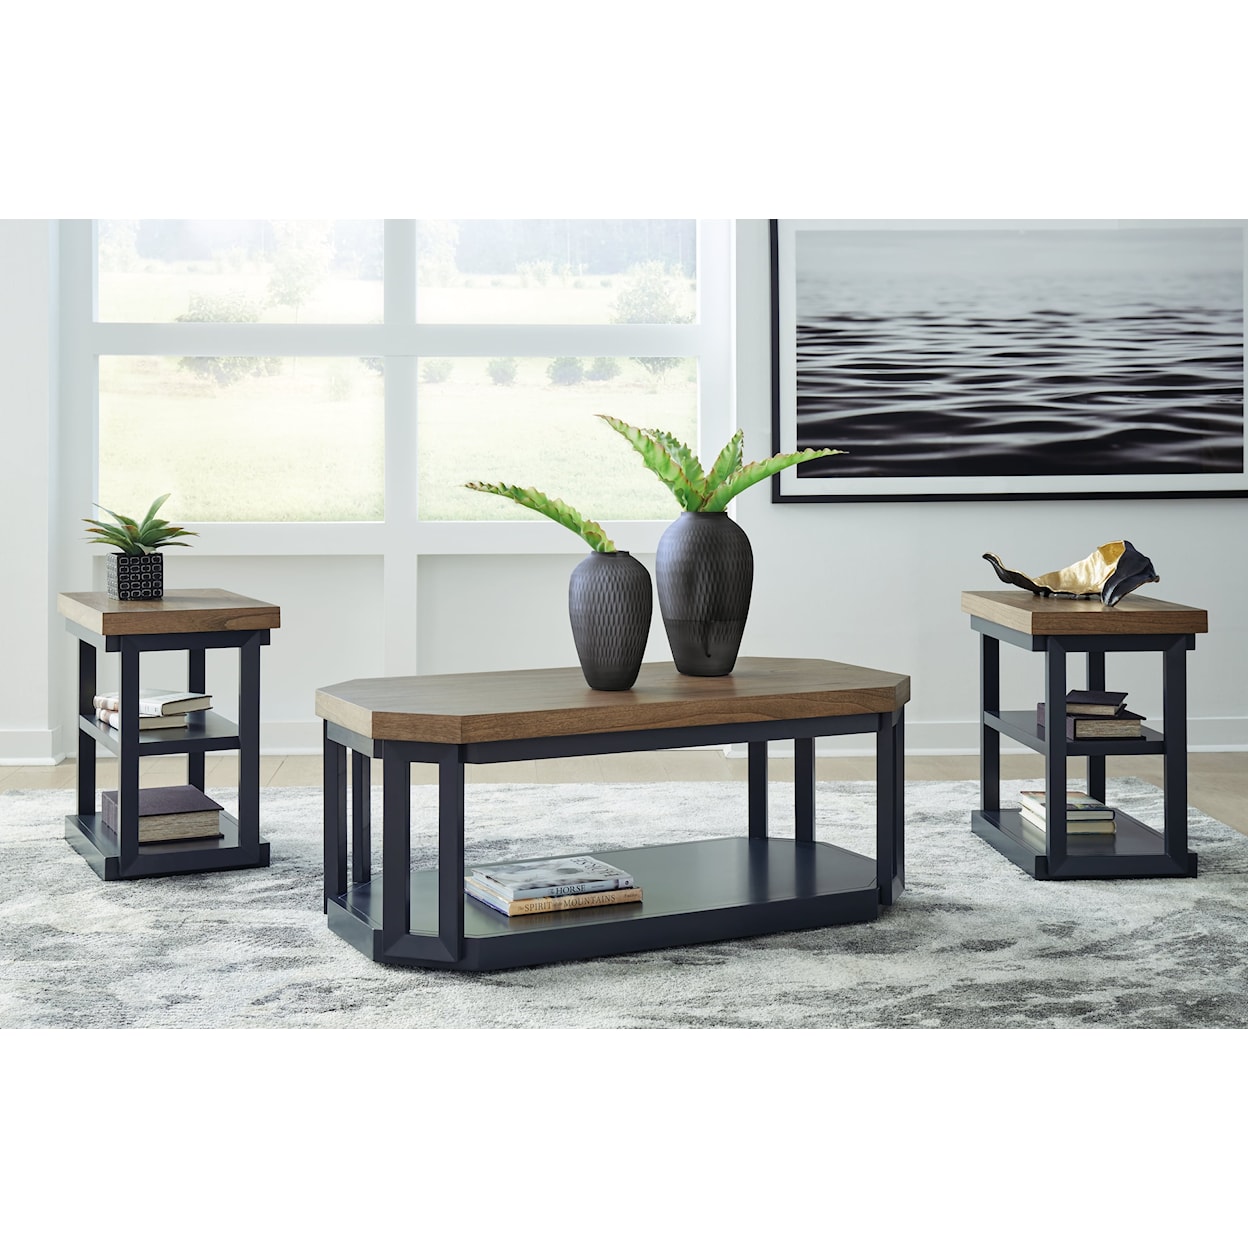 StyleLine Landocken Occasional Table Set (Set of 3)